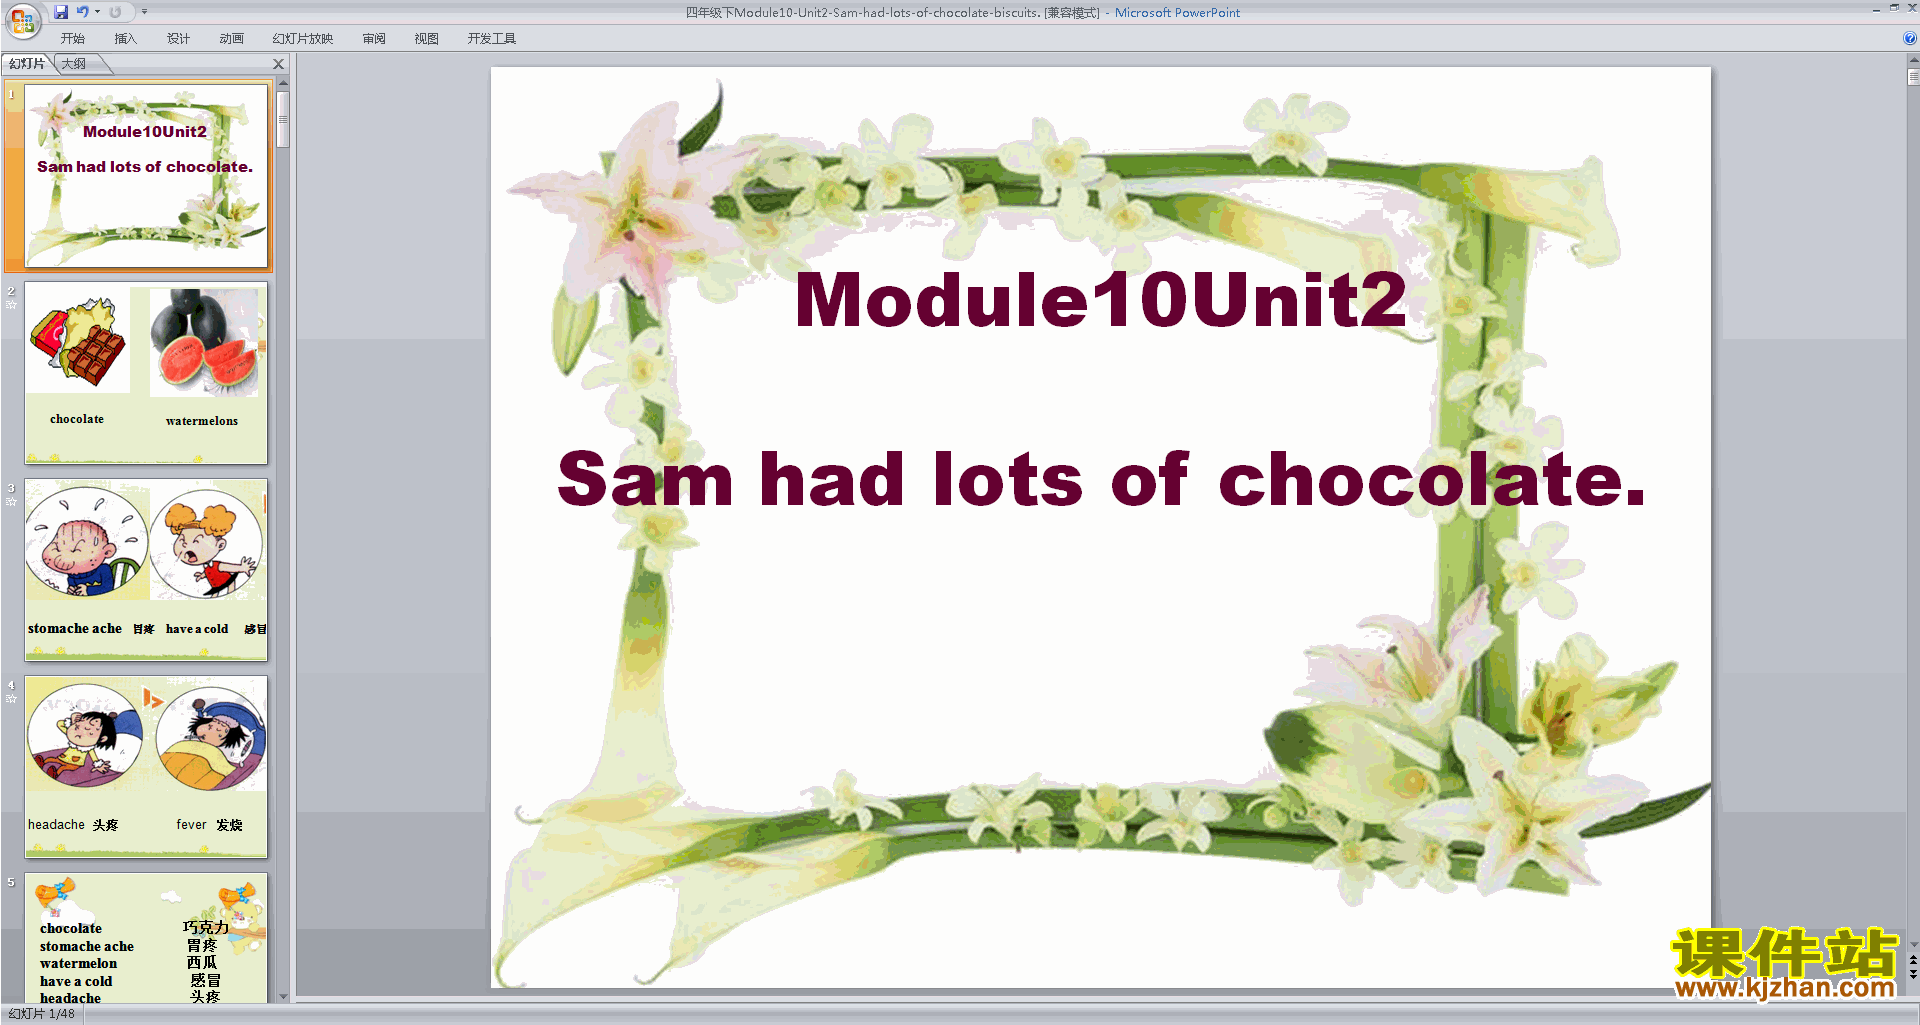 пModule10 Unit2 Sam had lots of chocolatepptμ